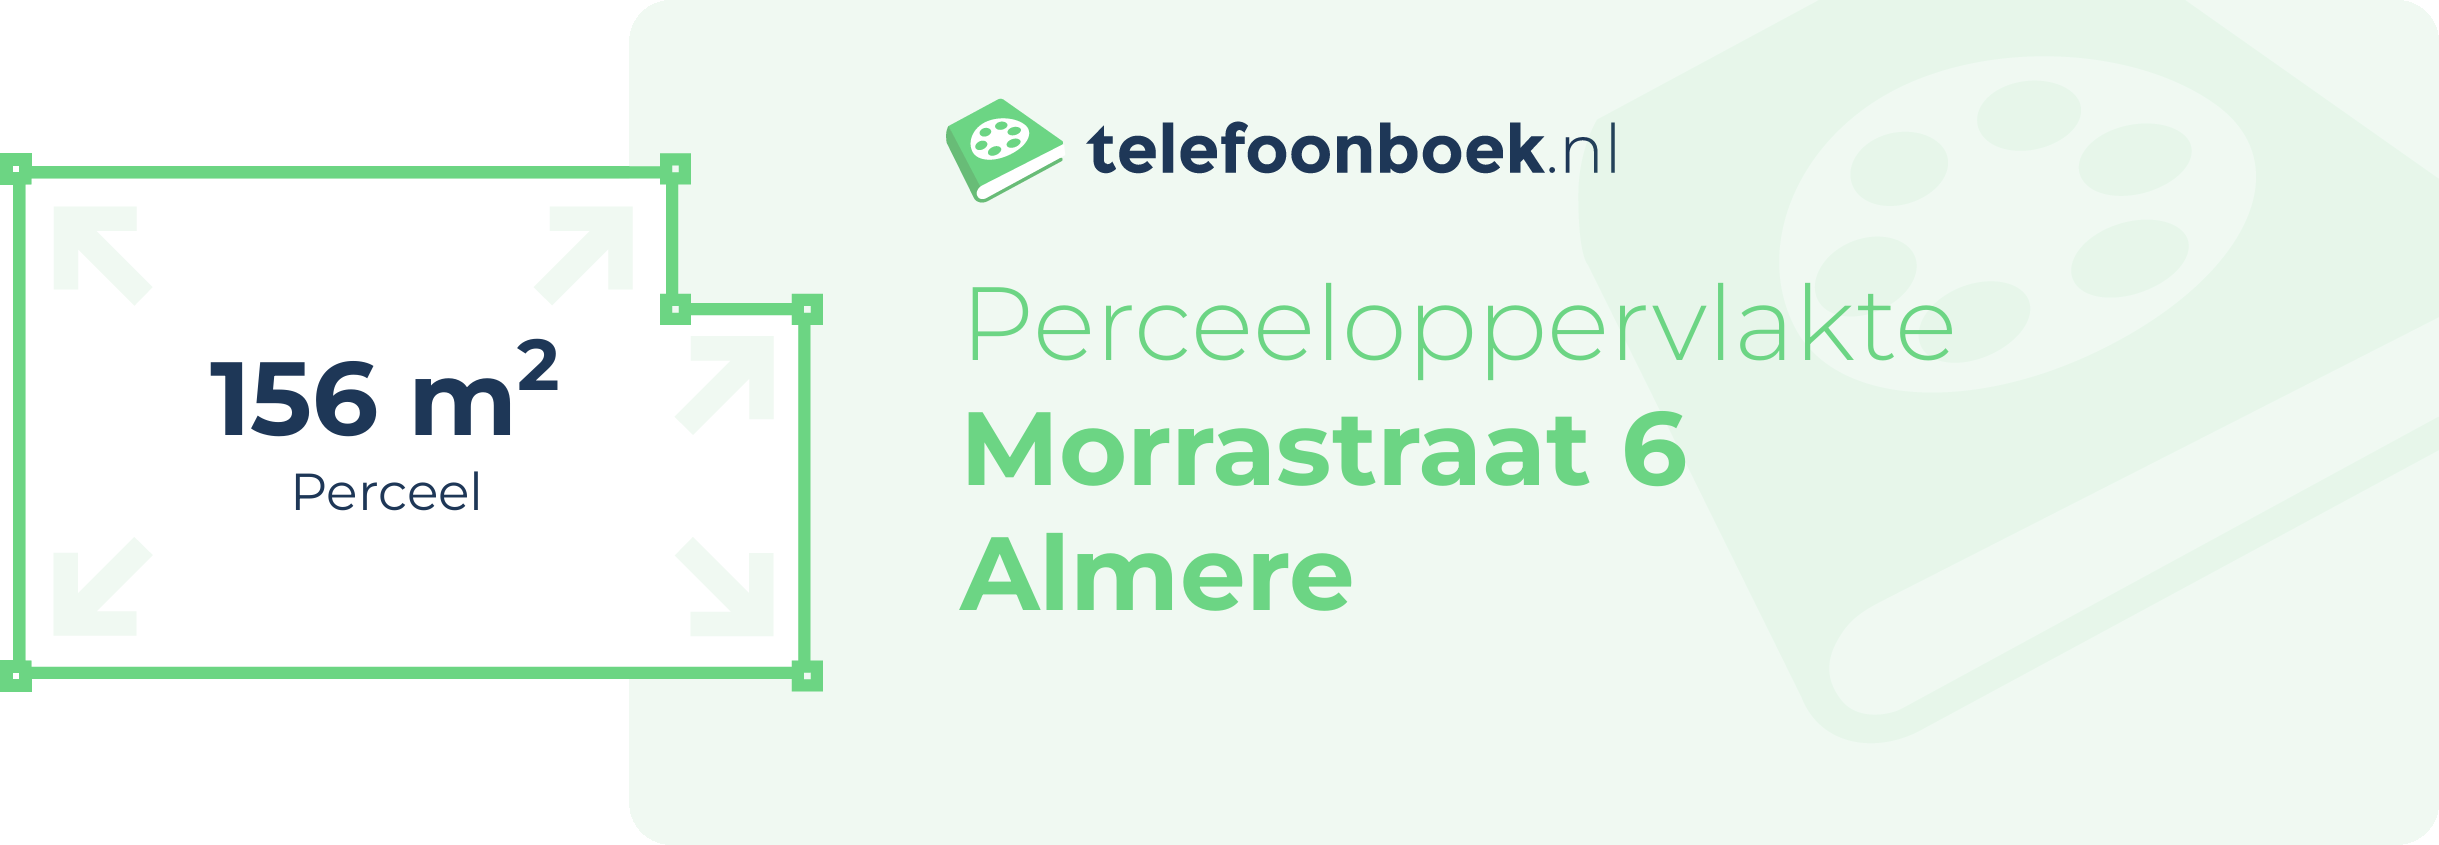 Perceeloppervlakte Morrastraat 6 Almere